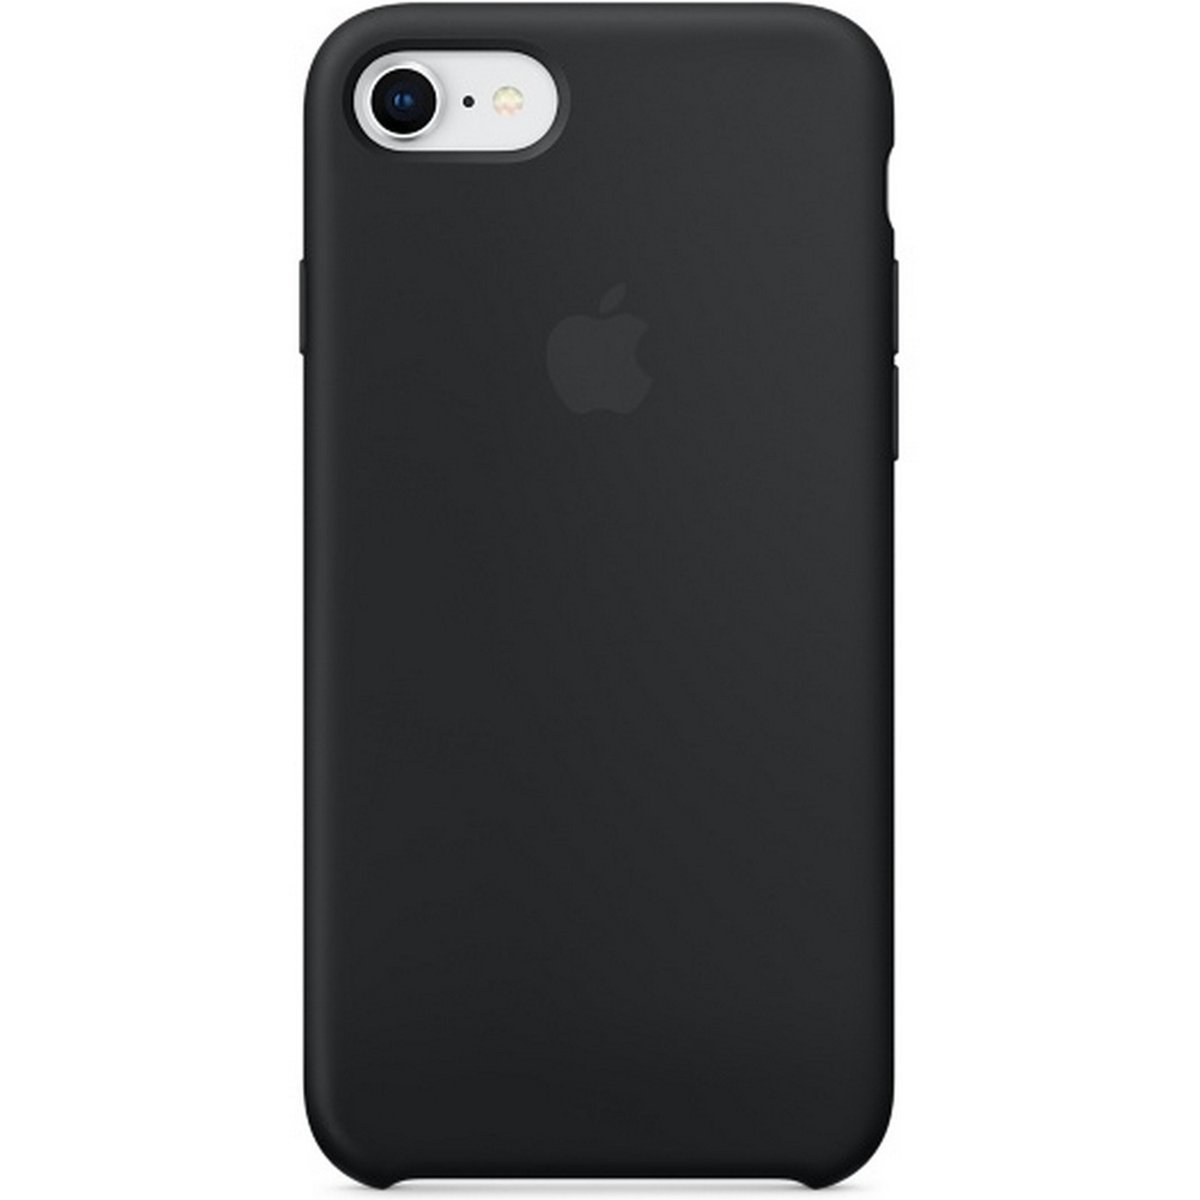 Apple iPhone 8 Silicone Case Black